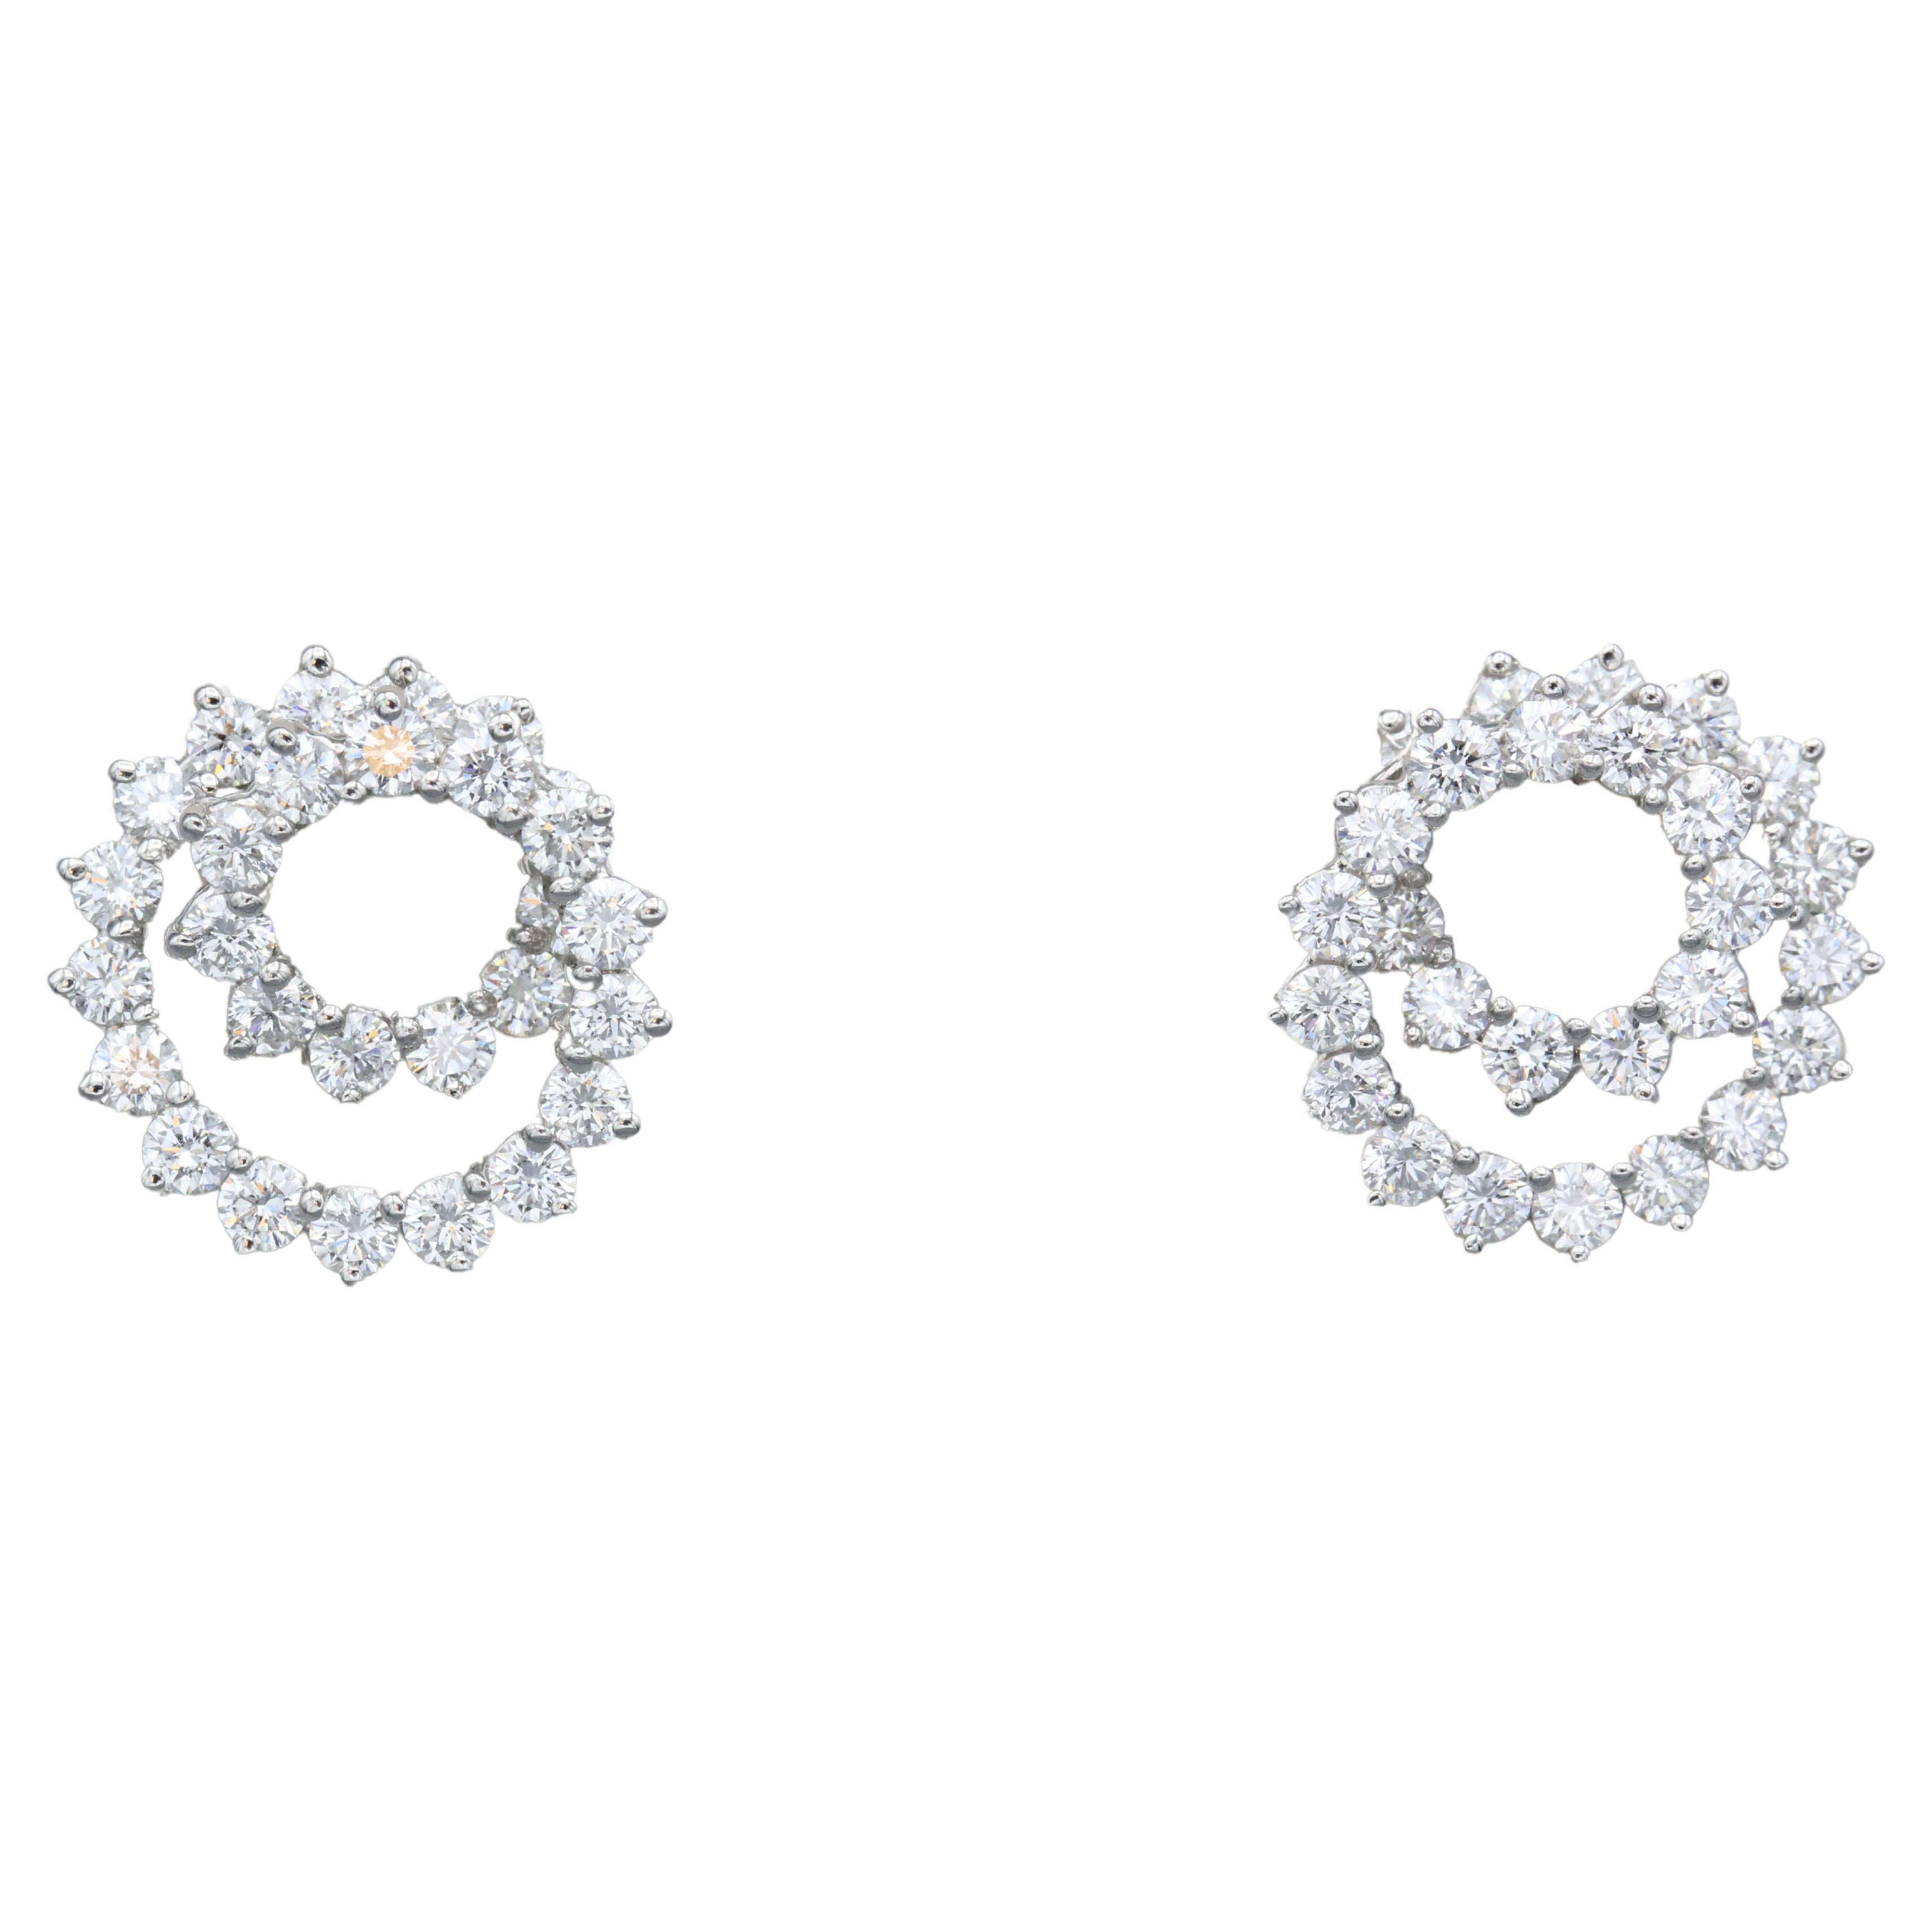 Tiffany & Co. Diamond and Platinum Swirl Earrings